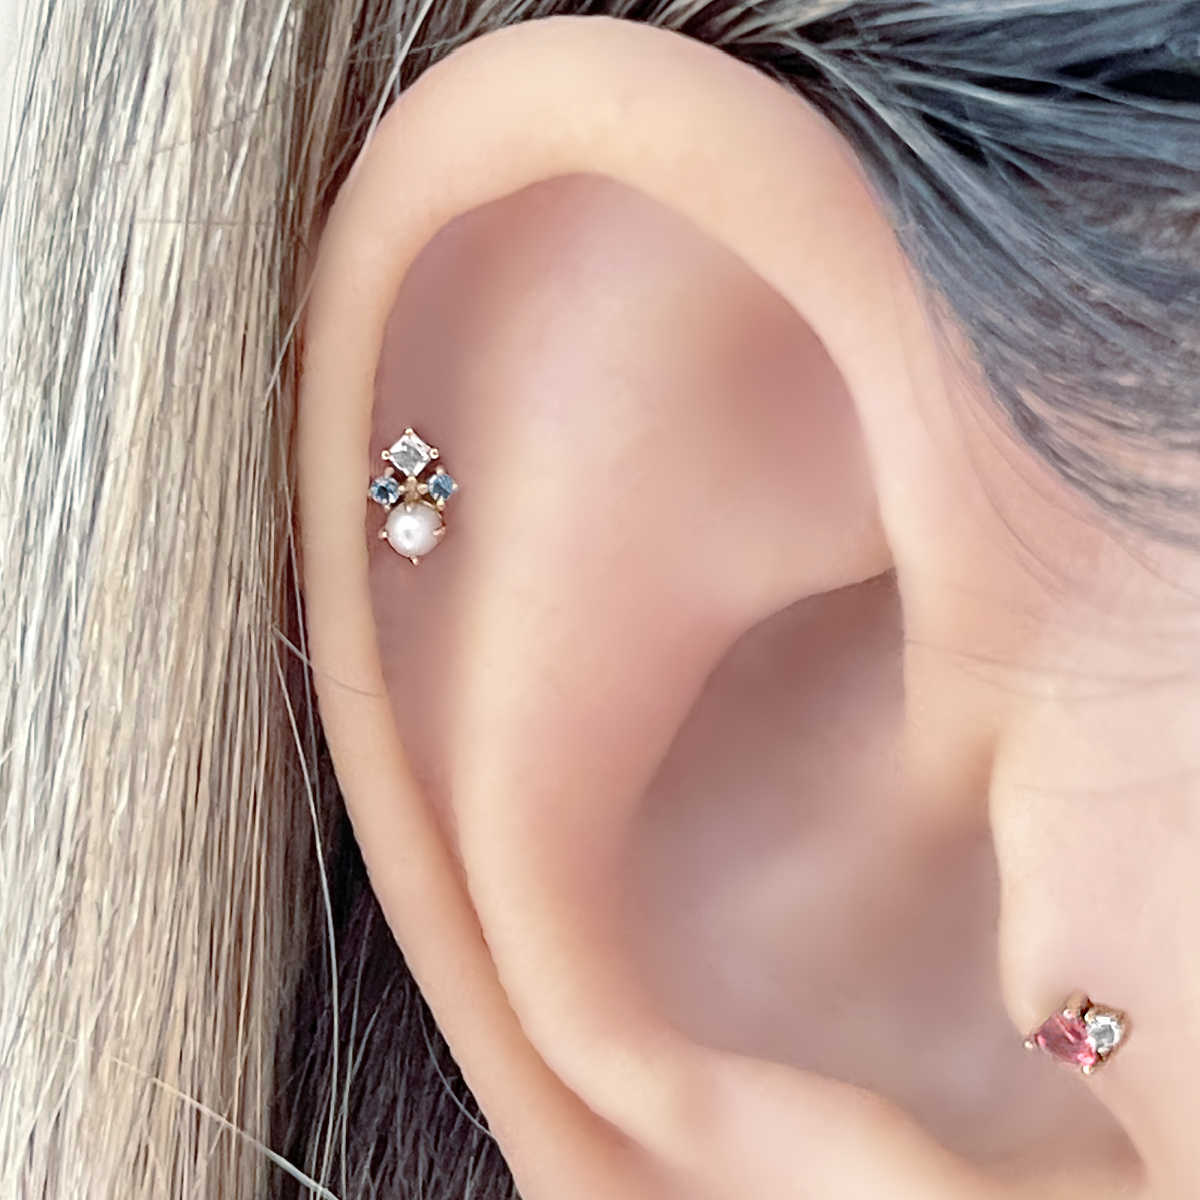 16G Cartilage Earring | Flat Back Tragus Helix Piercing